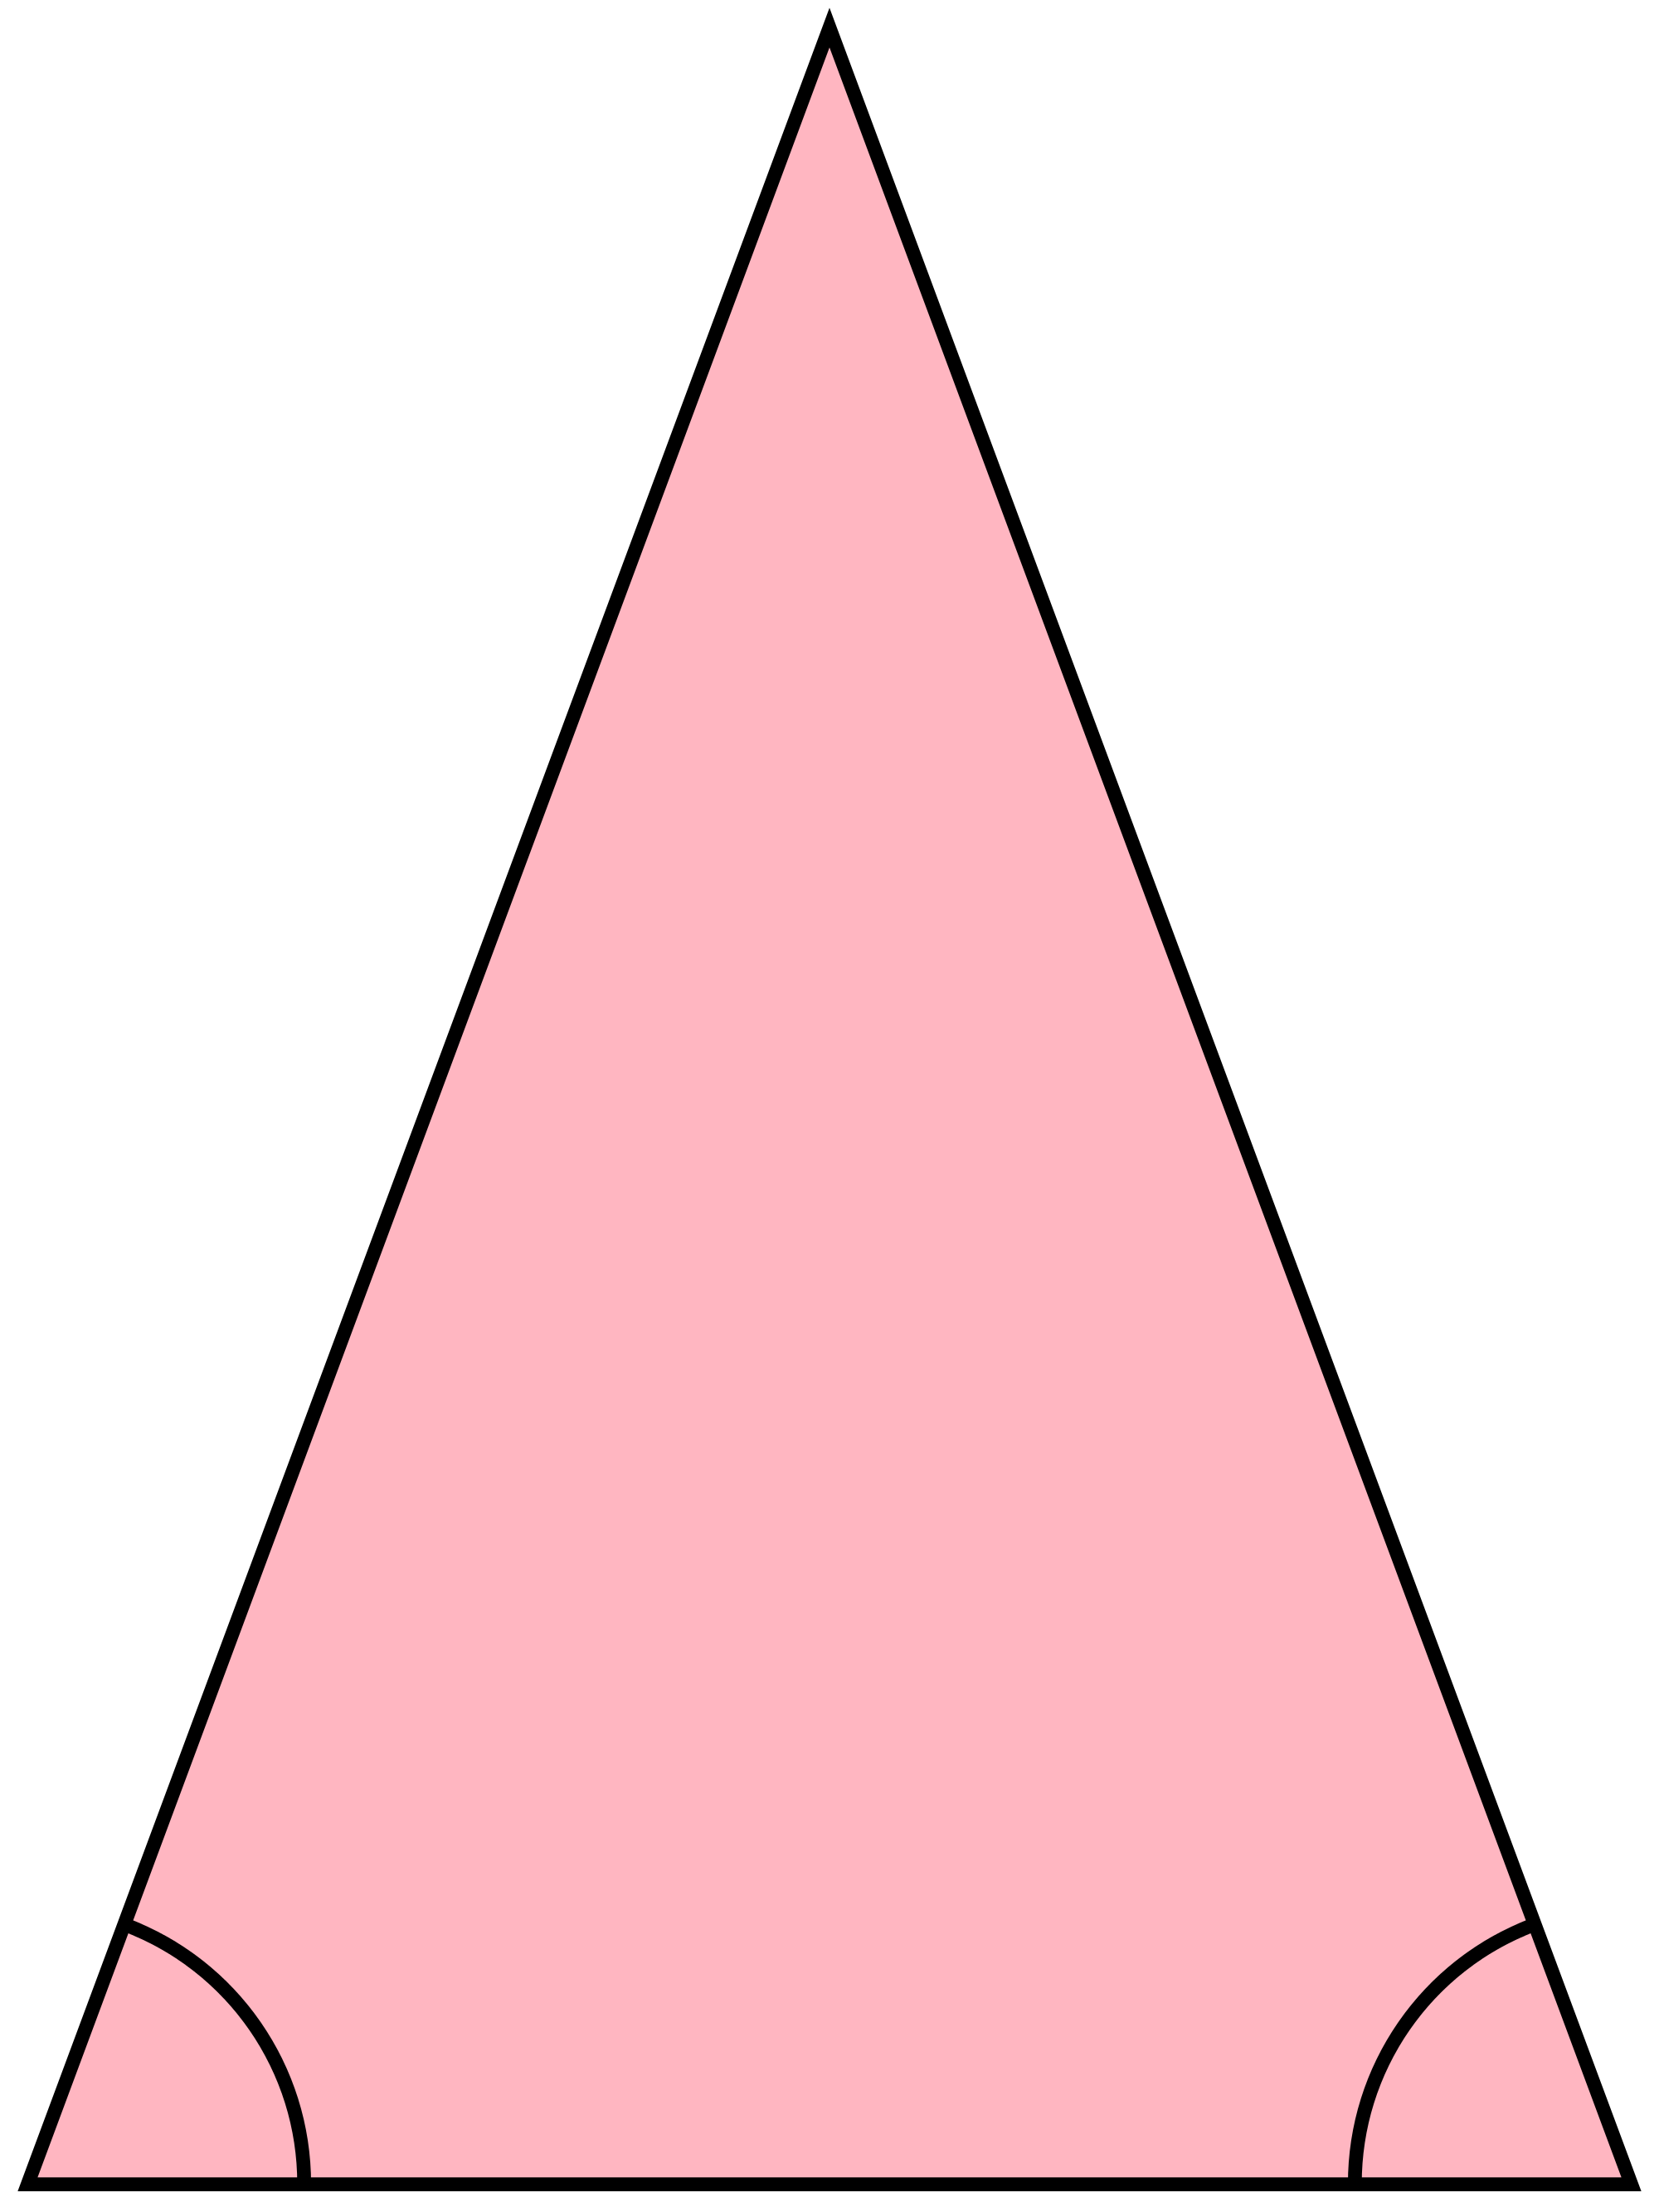 an isosceles triangle